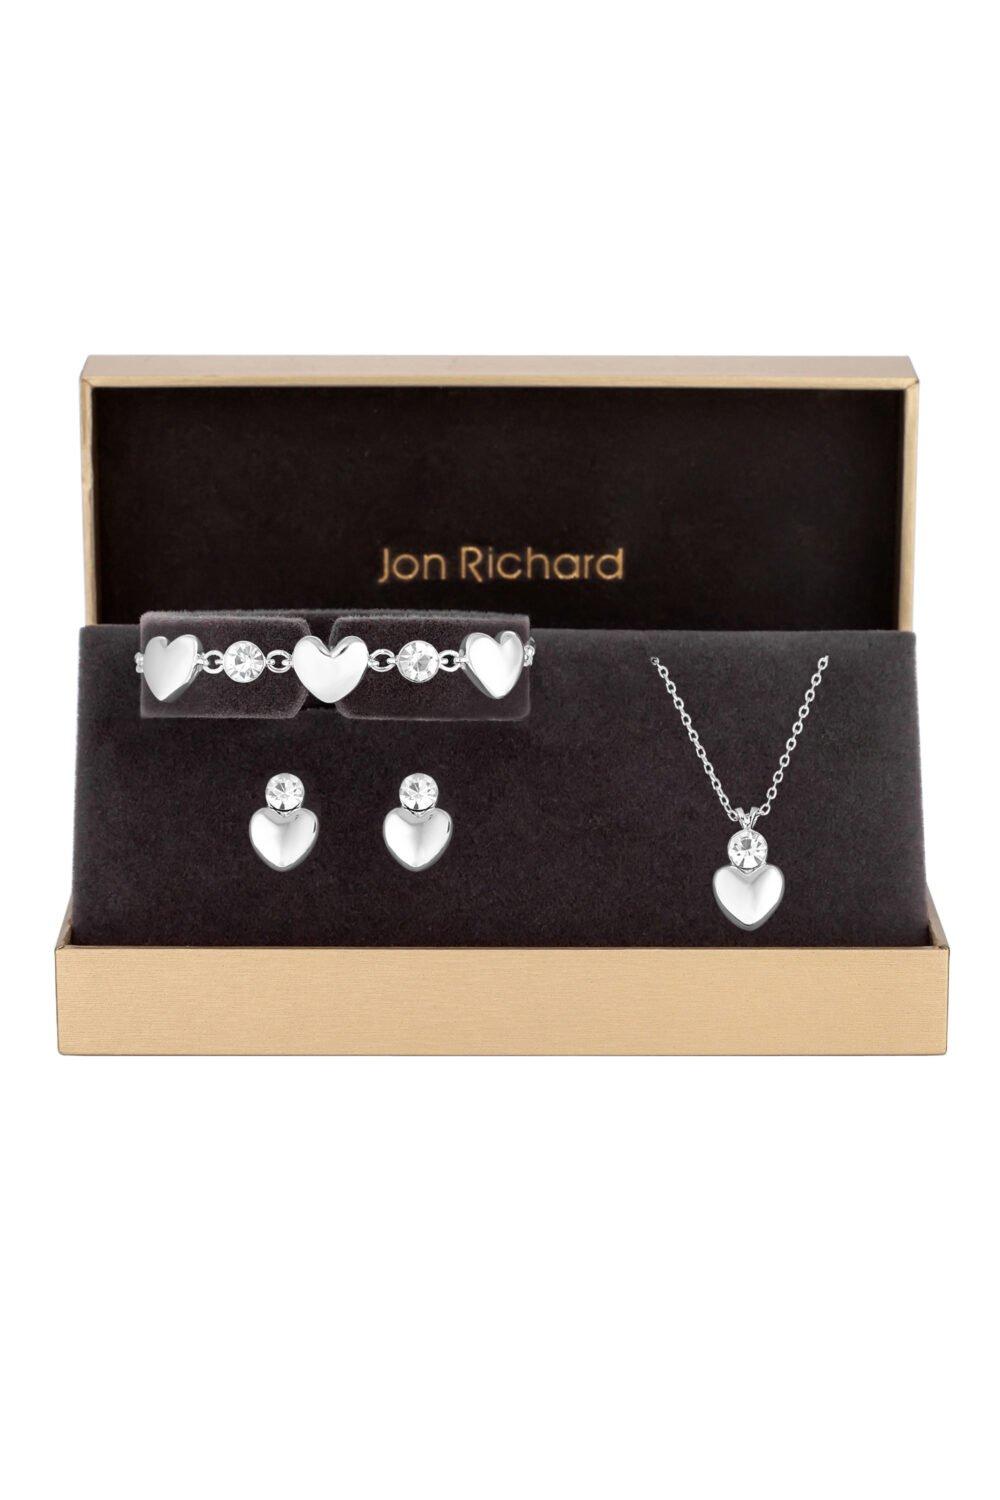 Jon Richard Jon Richard Silver Plated And Polished Heart Trio Set - Gift Boxed